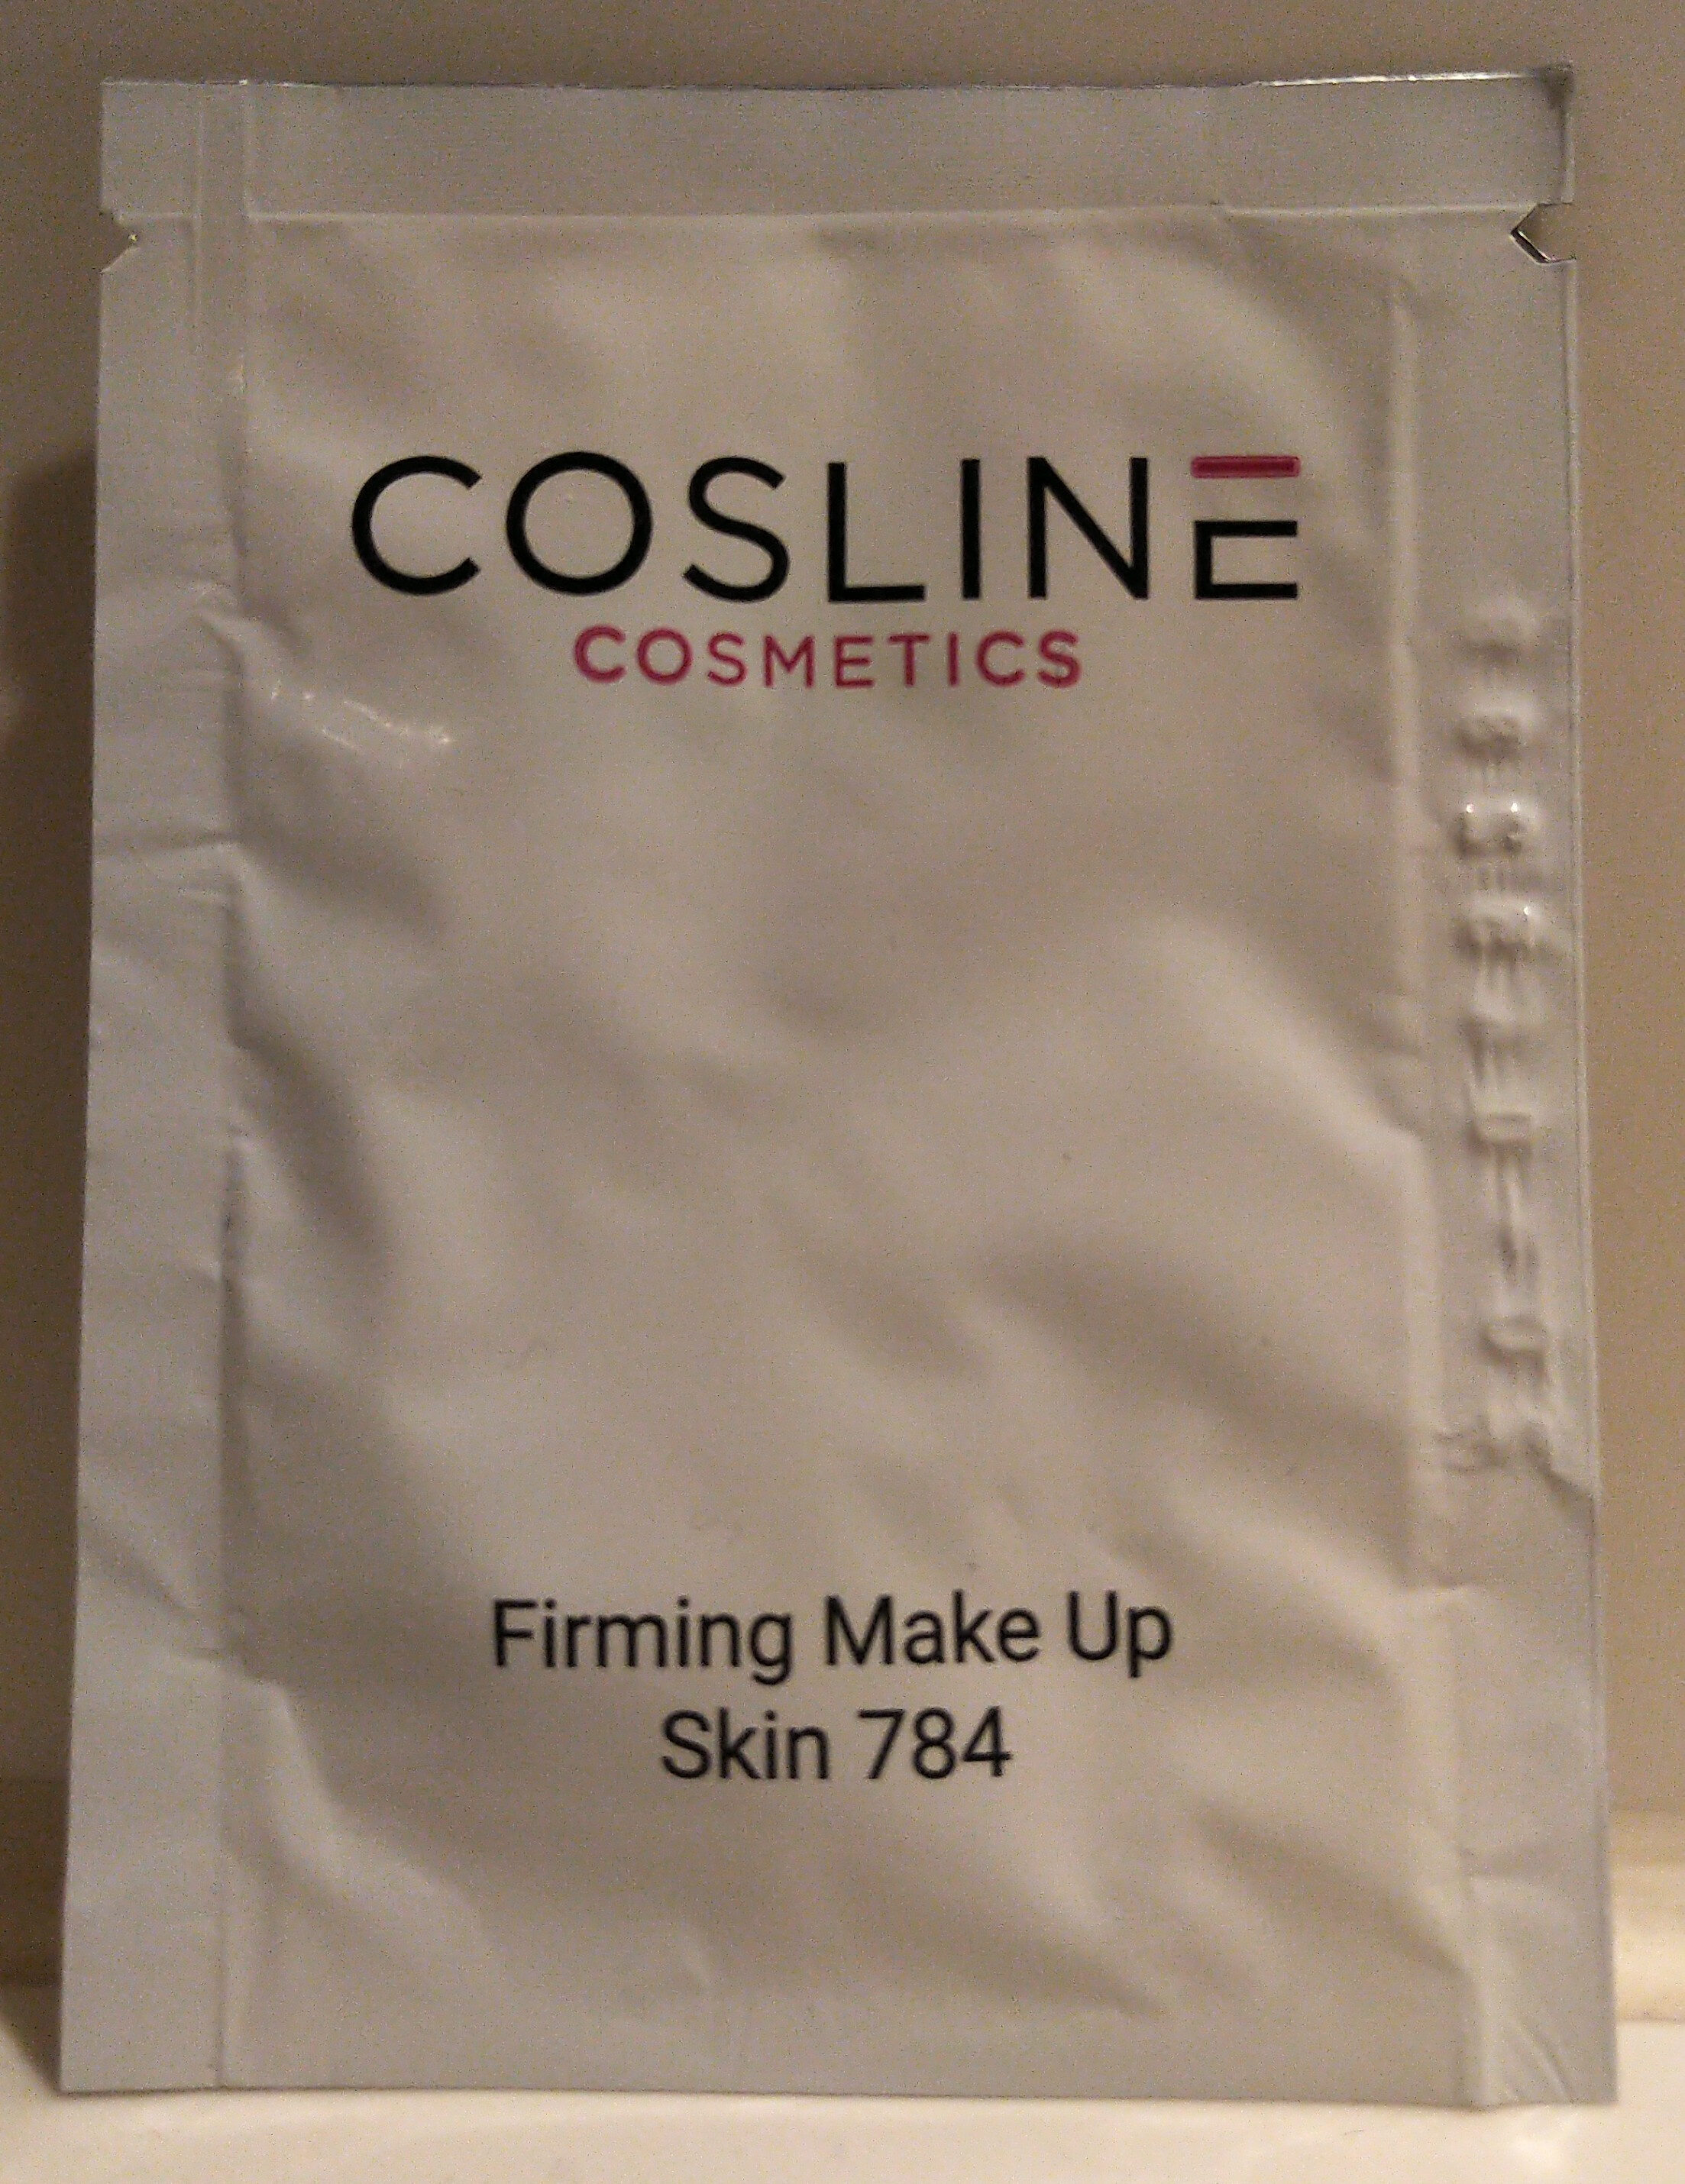 Firming Make Up Skin 784 - Product - de